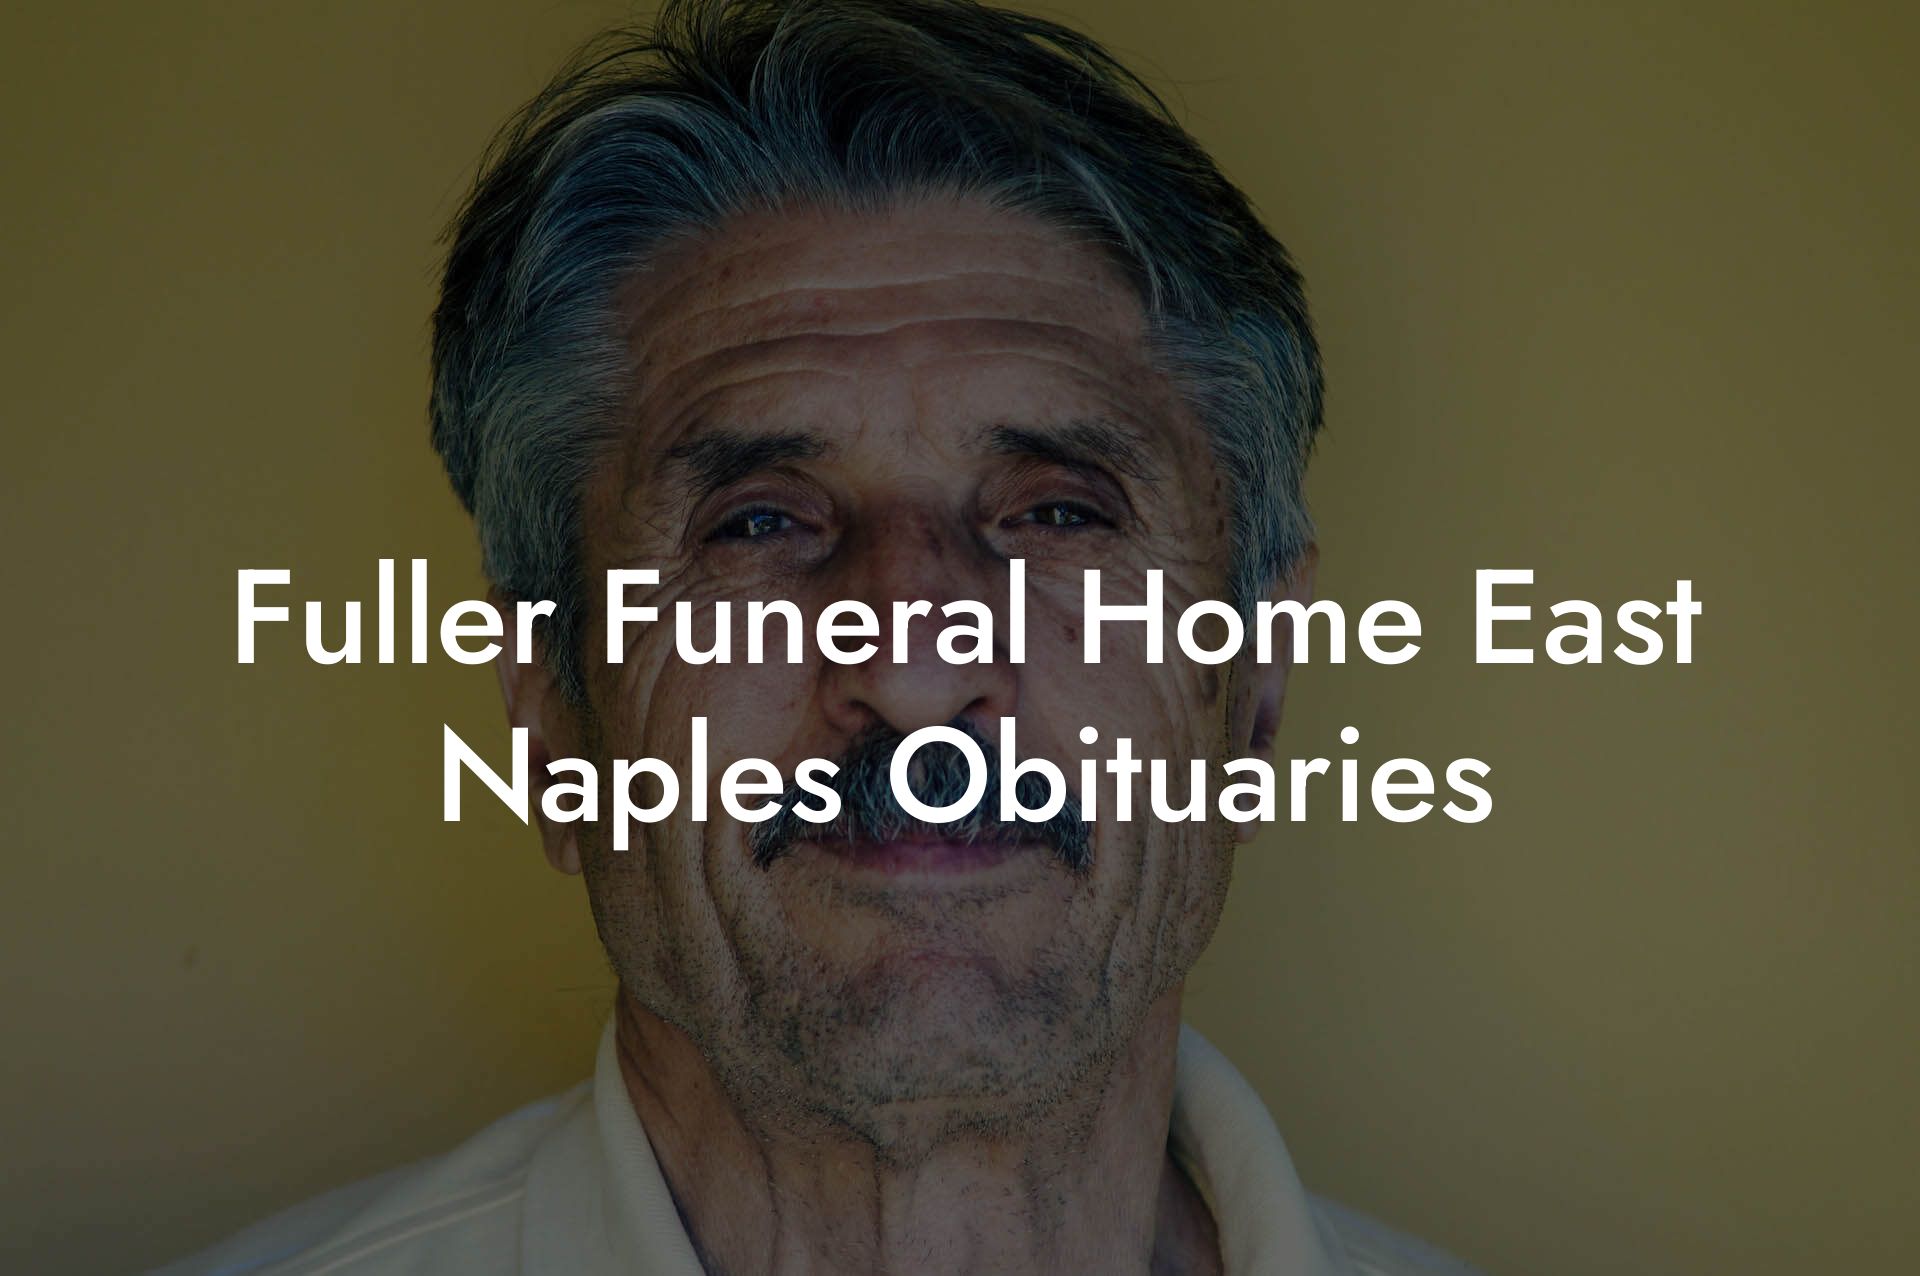 Fuller Funeral Home East Naples Obituaries